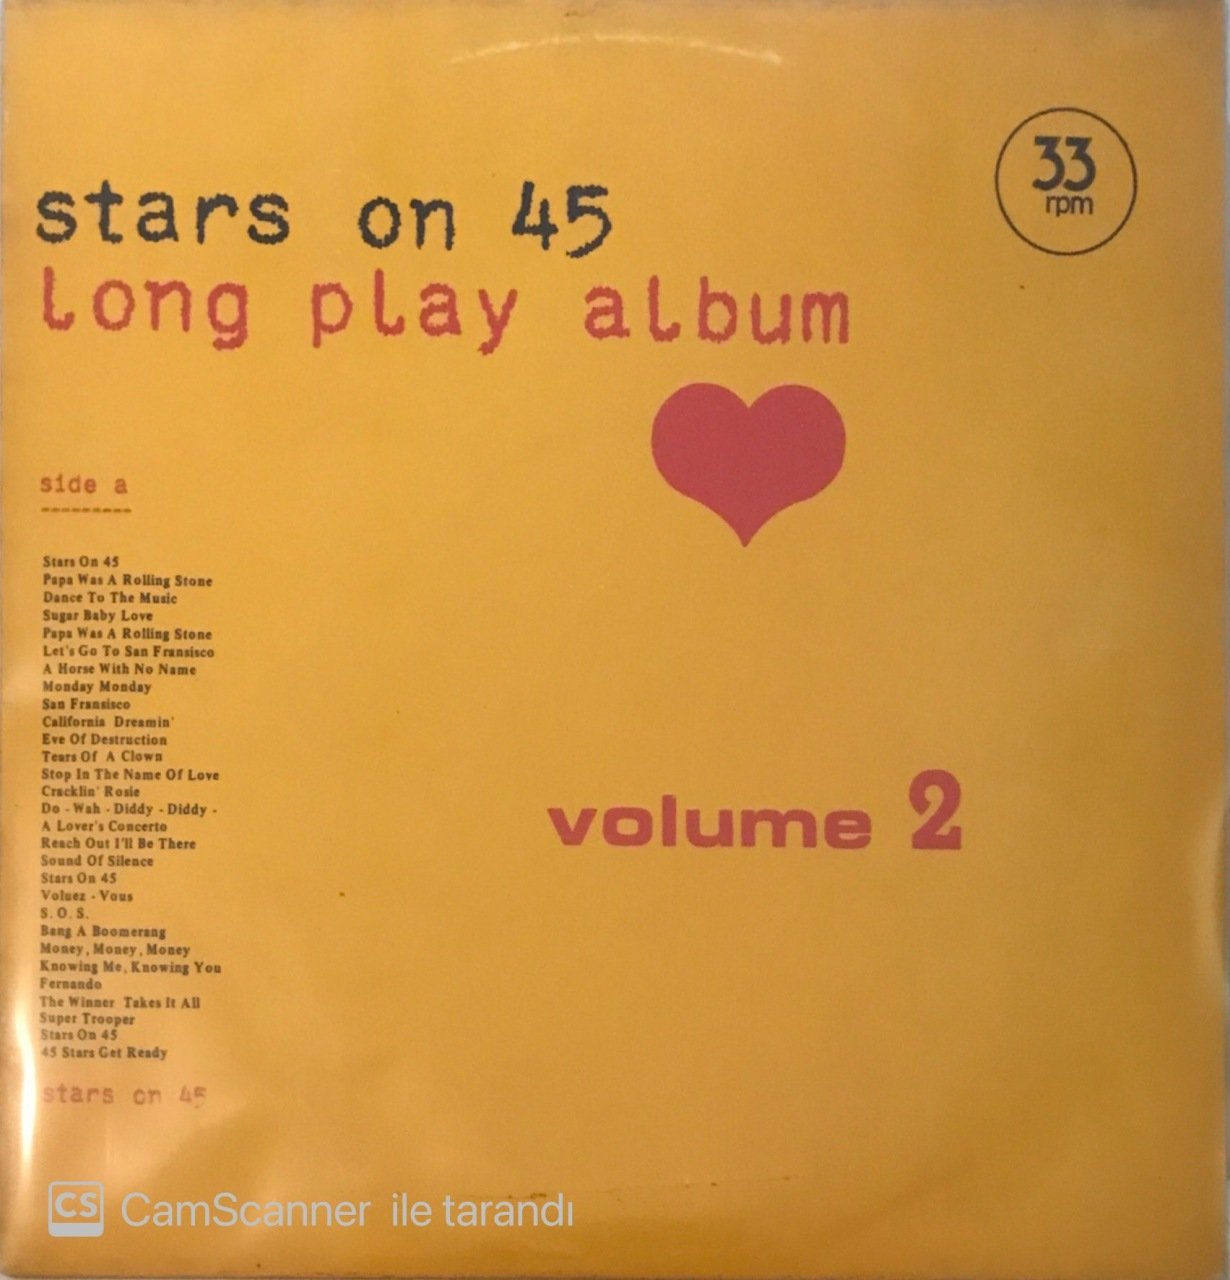 Stars On 45 Long Play Album Volume 2 LP